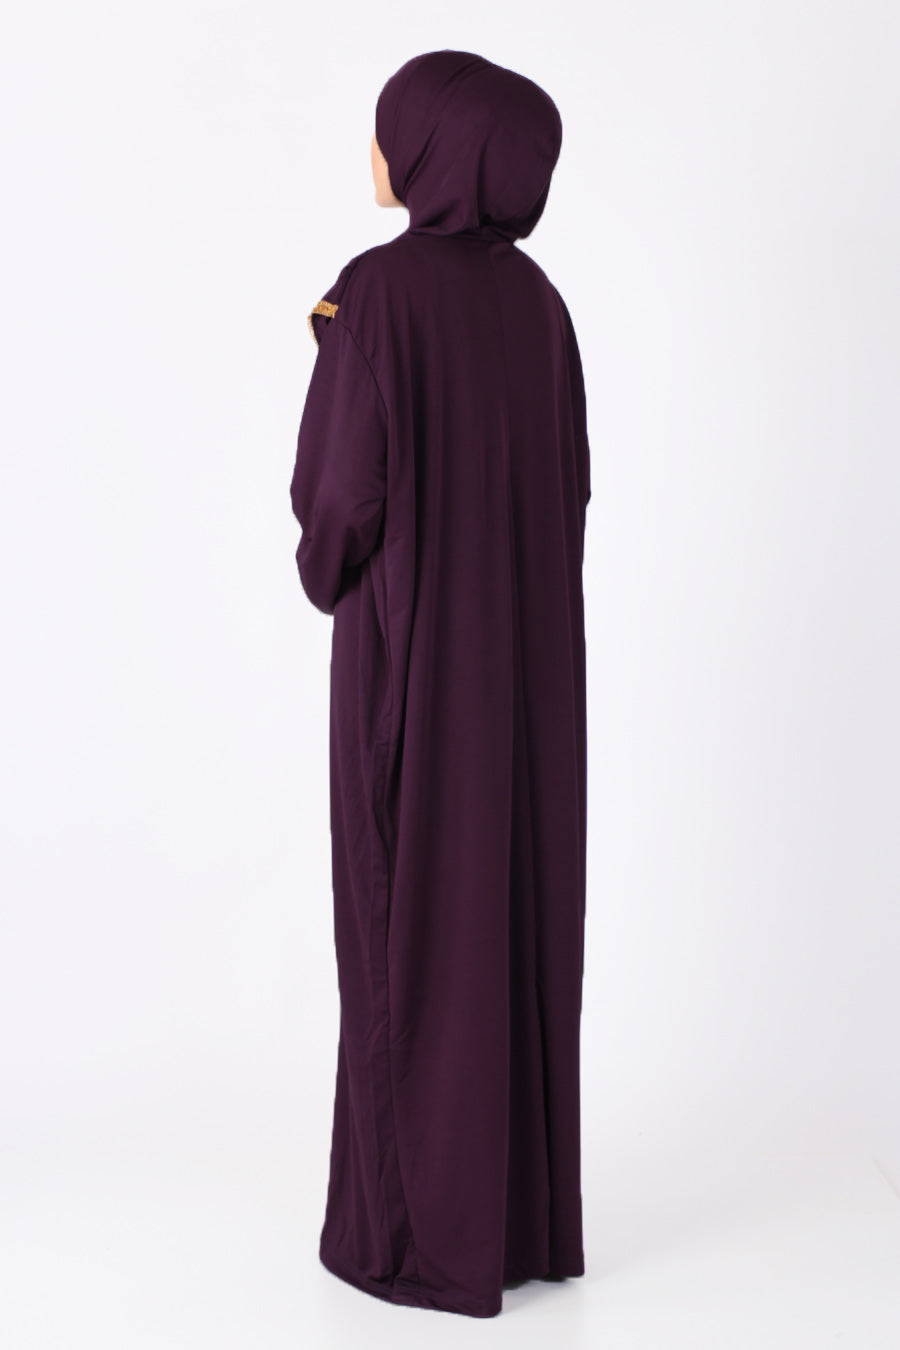 Dark Purple with Lace Turkish Prayer Dress